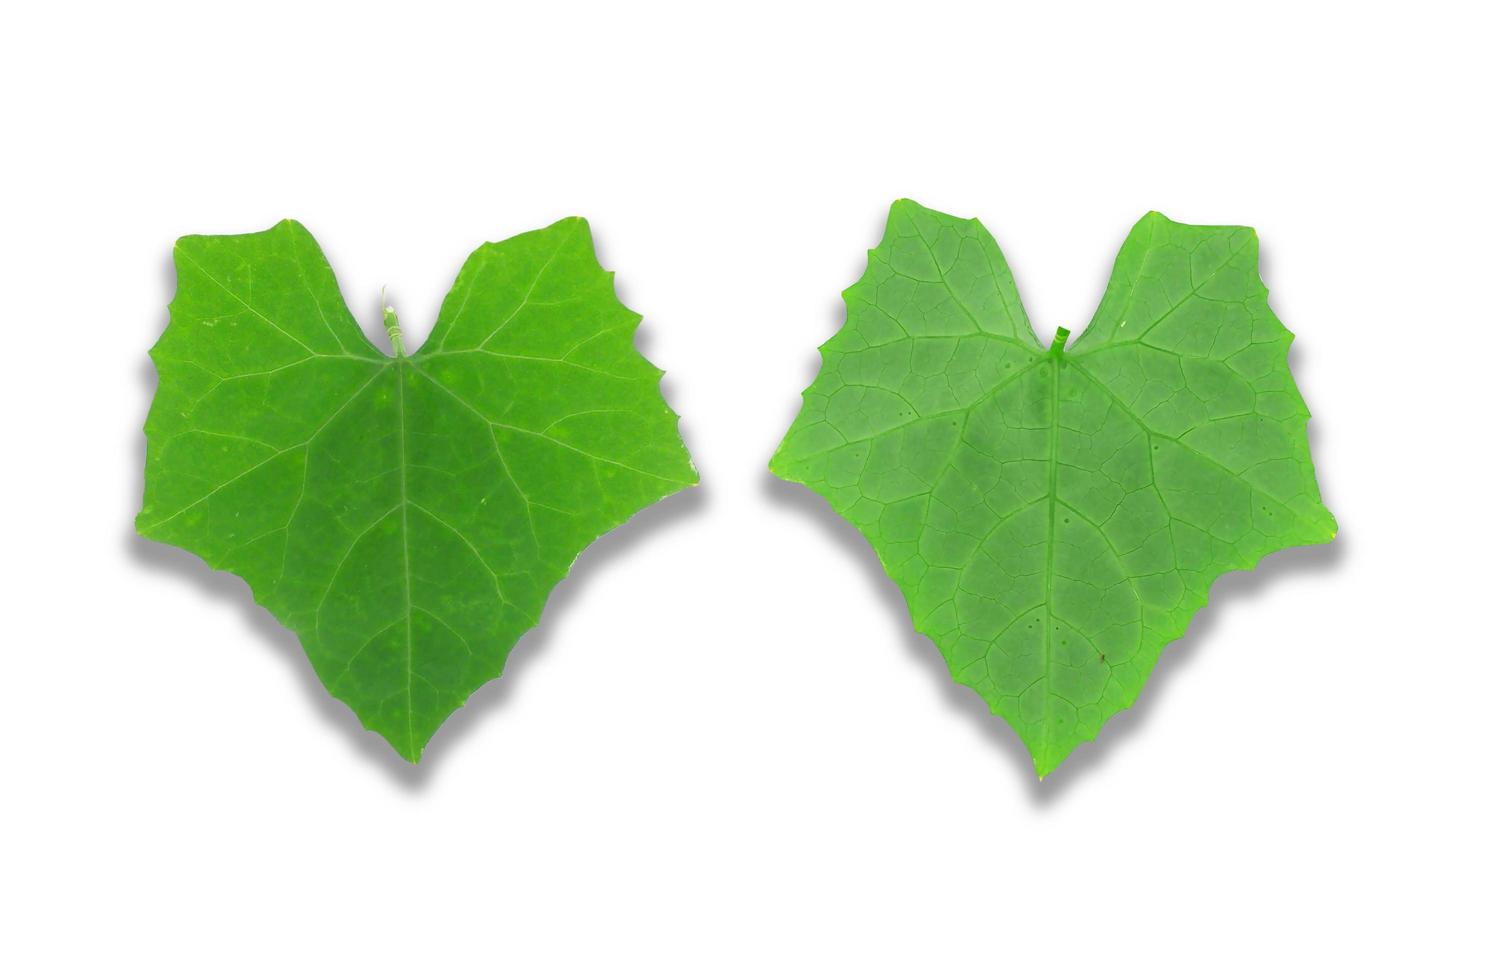 klimop kalebas bladeren Aan wit achtergrond foto